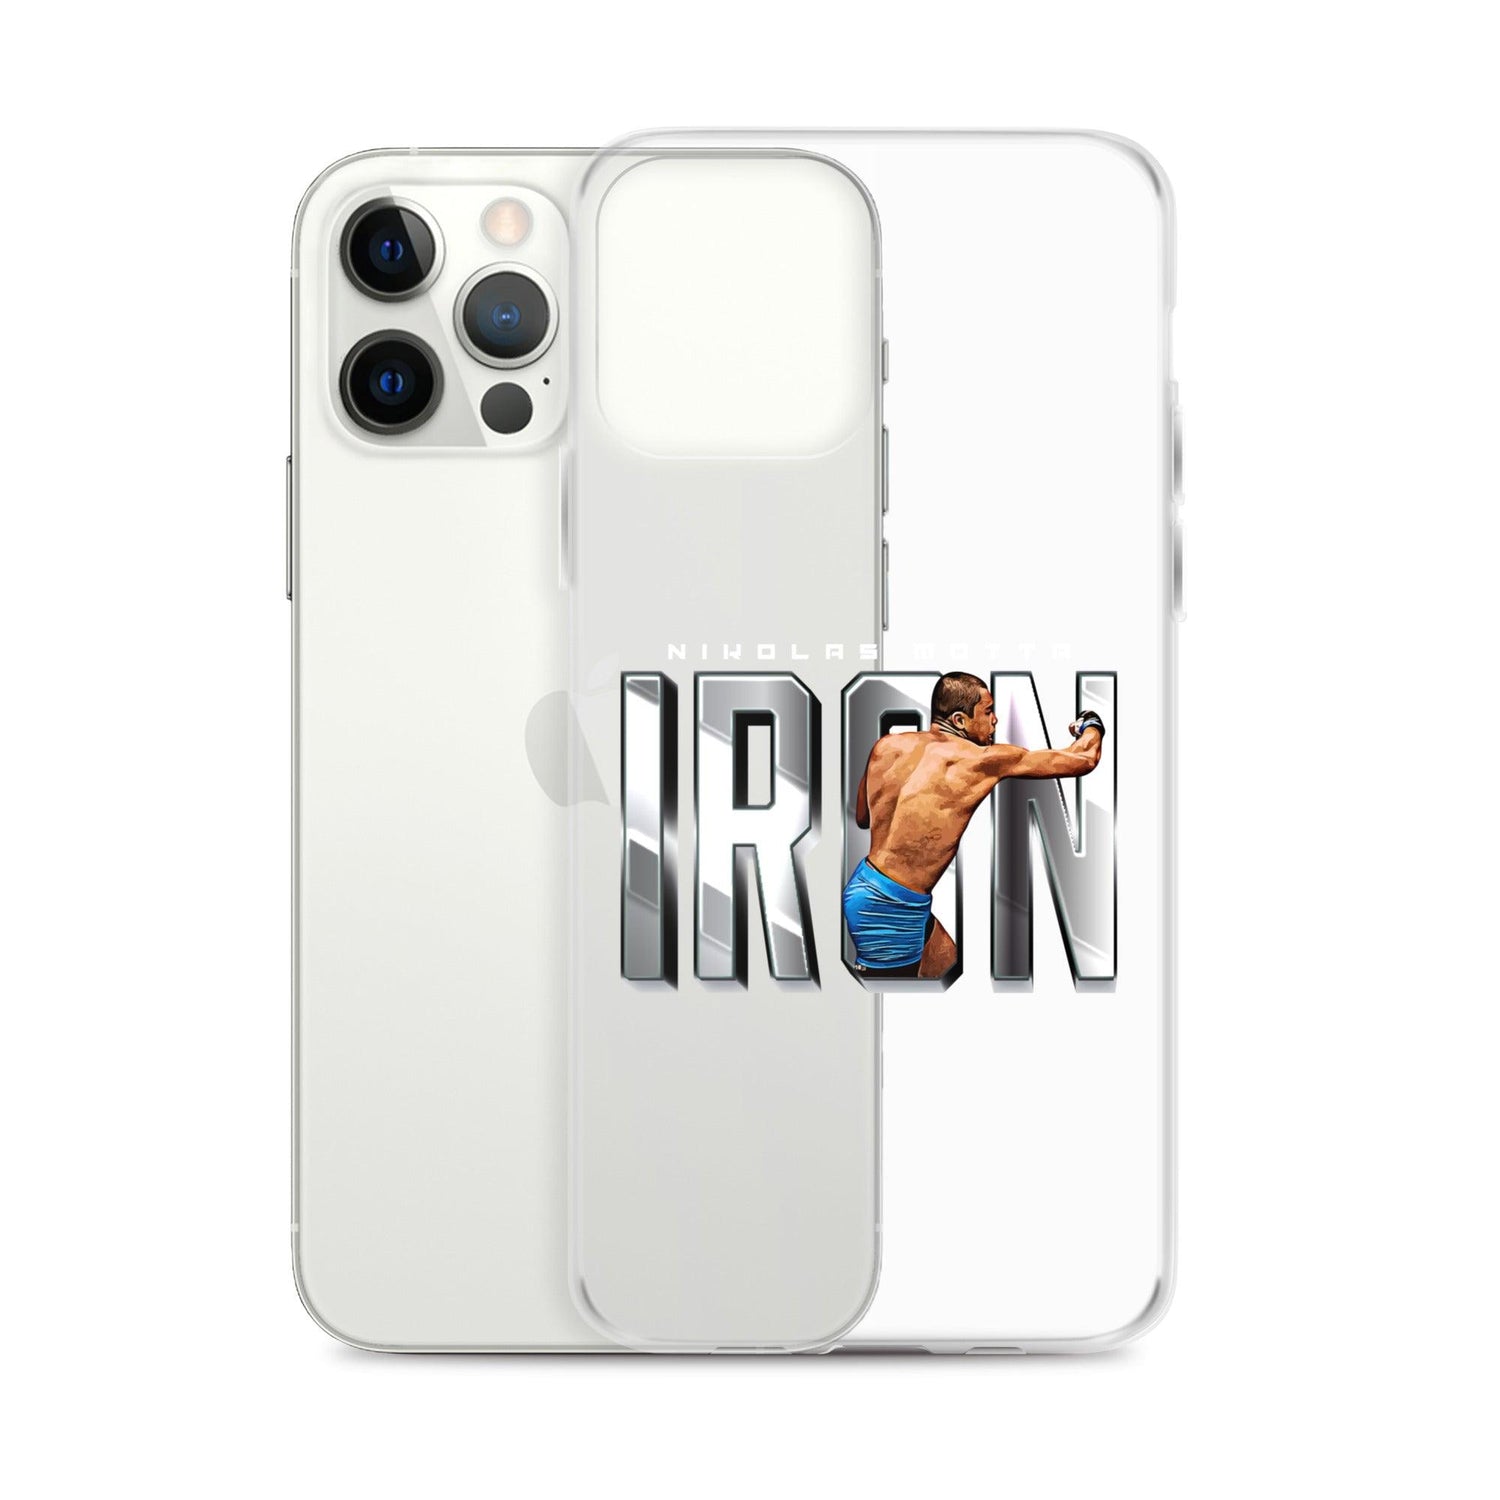 Nikolas Motta "IRON" iPhone Case - Fan Arch